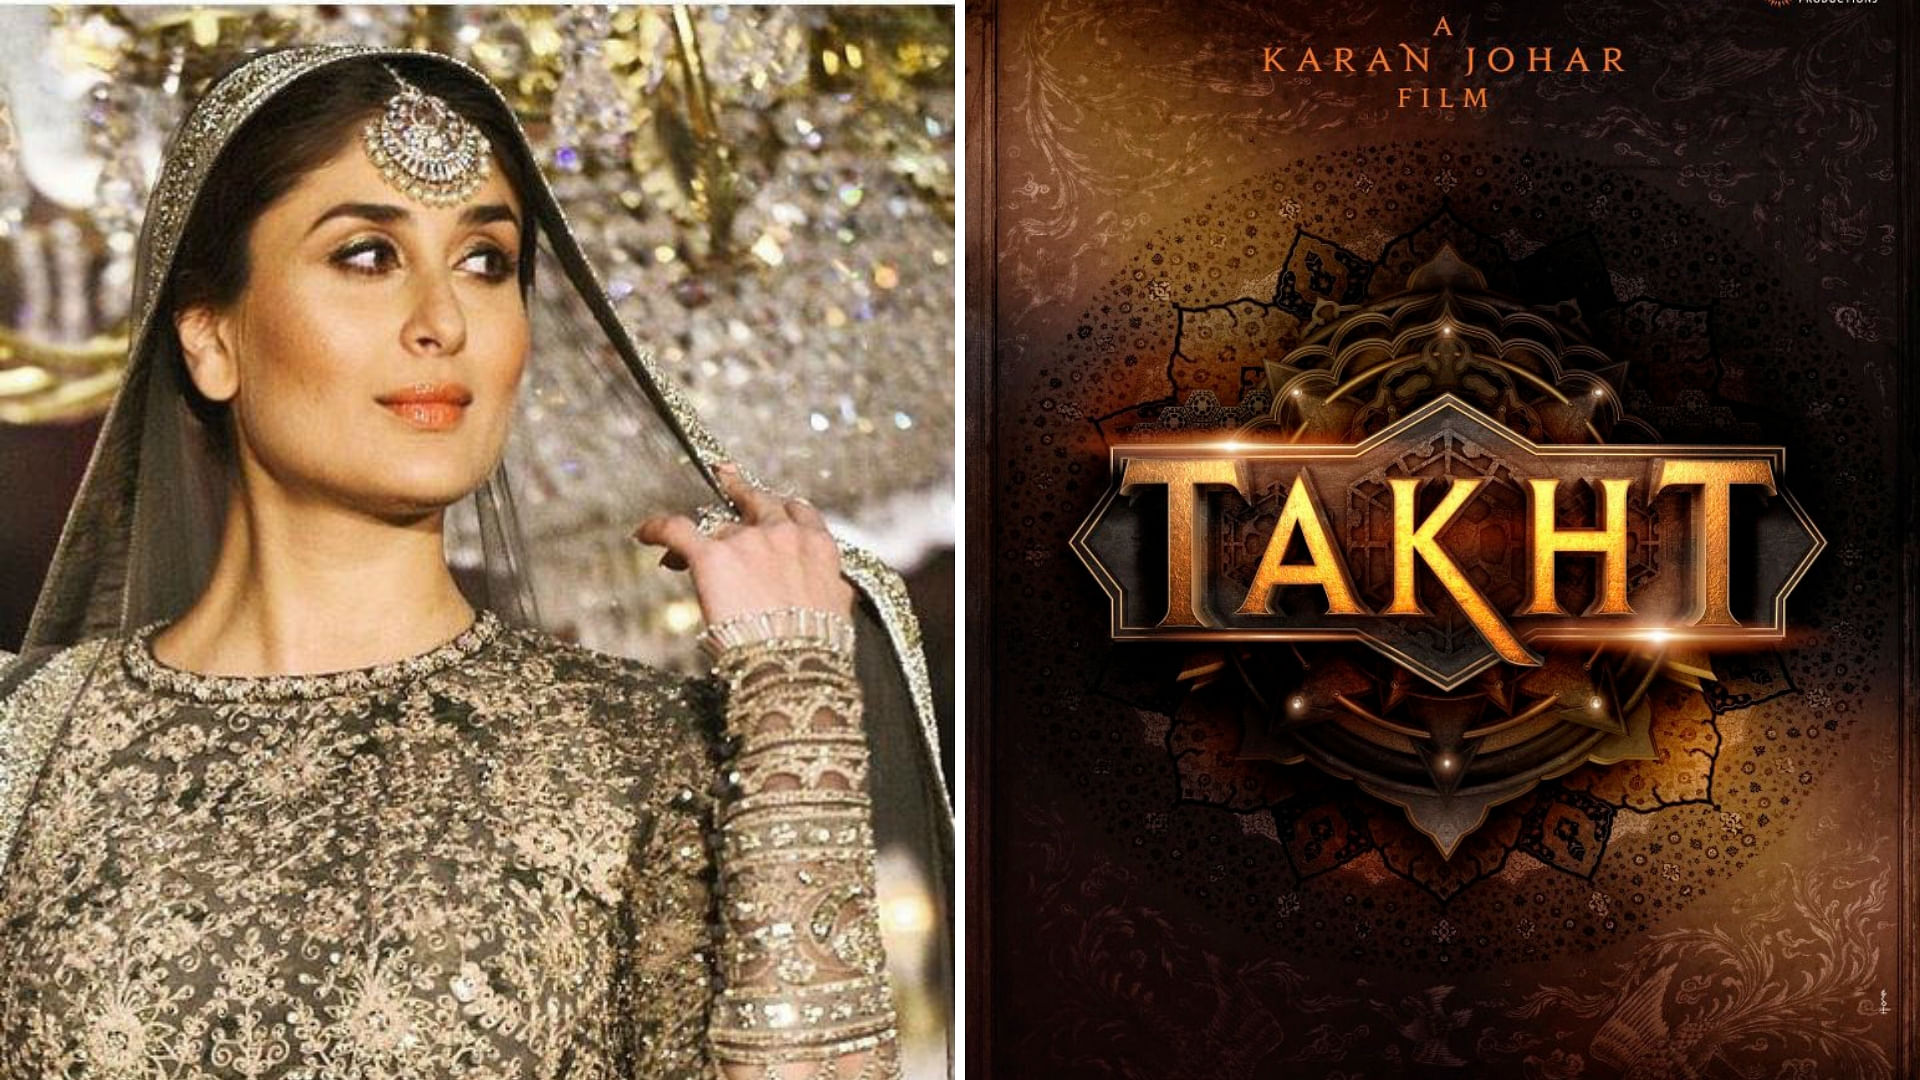 Kareena Kapoor will star in Karan Johar’s <i>Takht</i>.